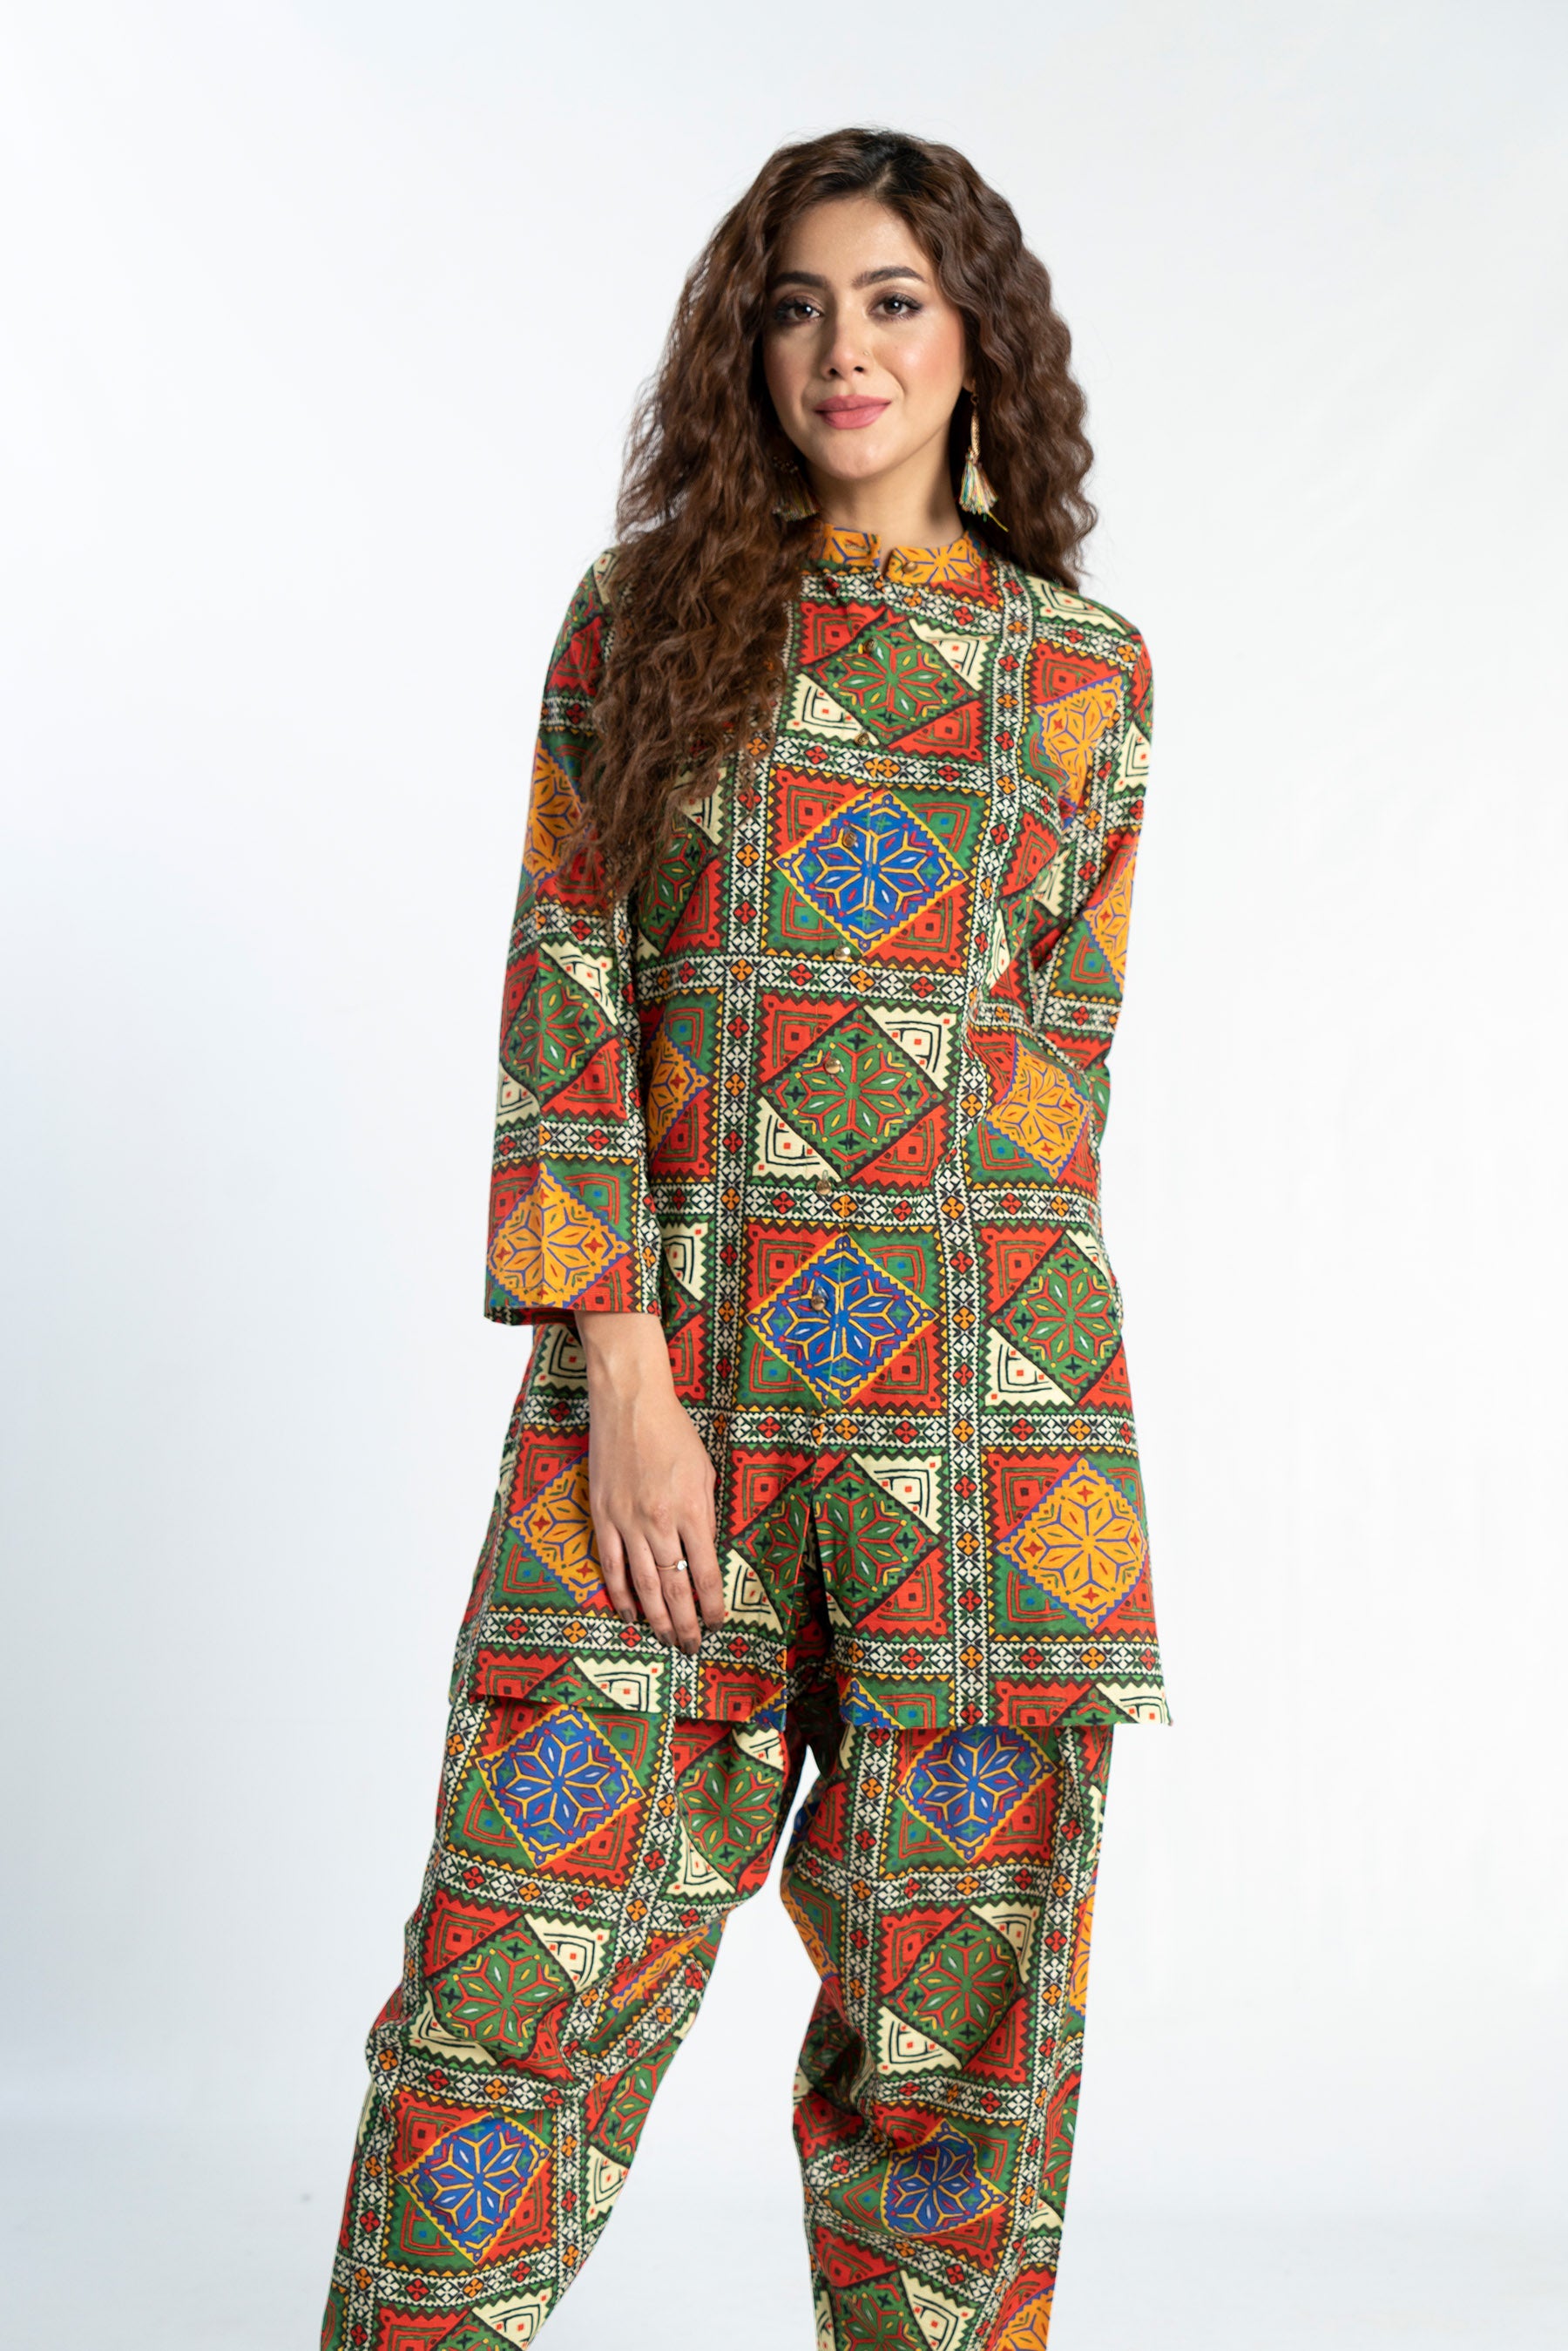 Mix Ralli Patch in Multi coloured Printed Slub Khaddar fabric 2